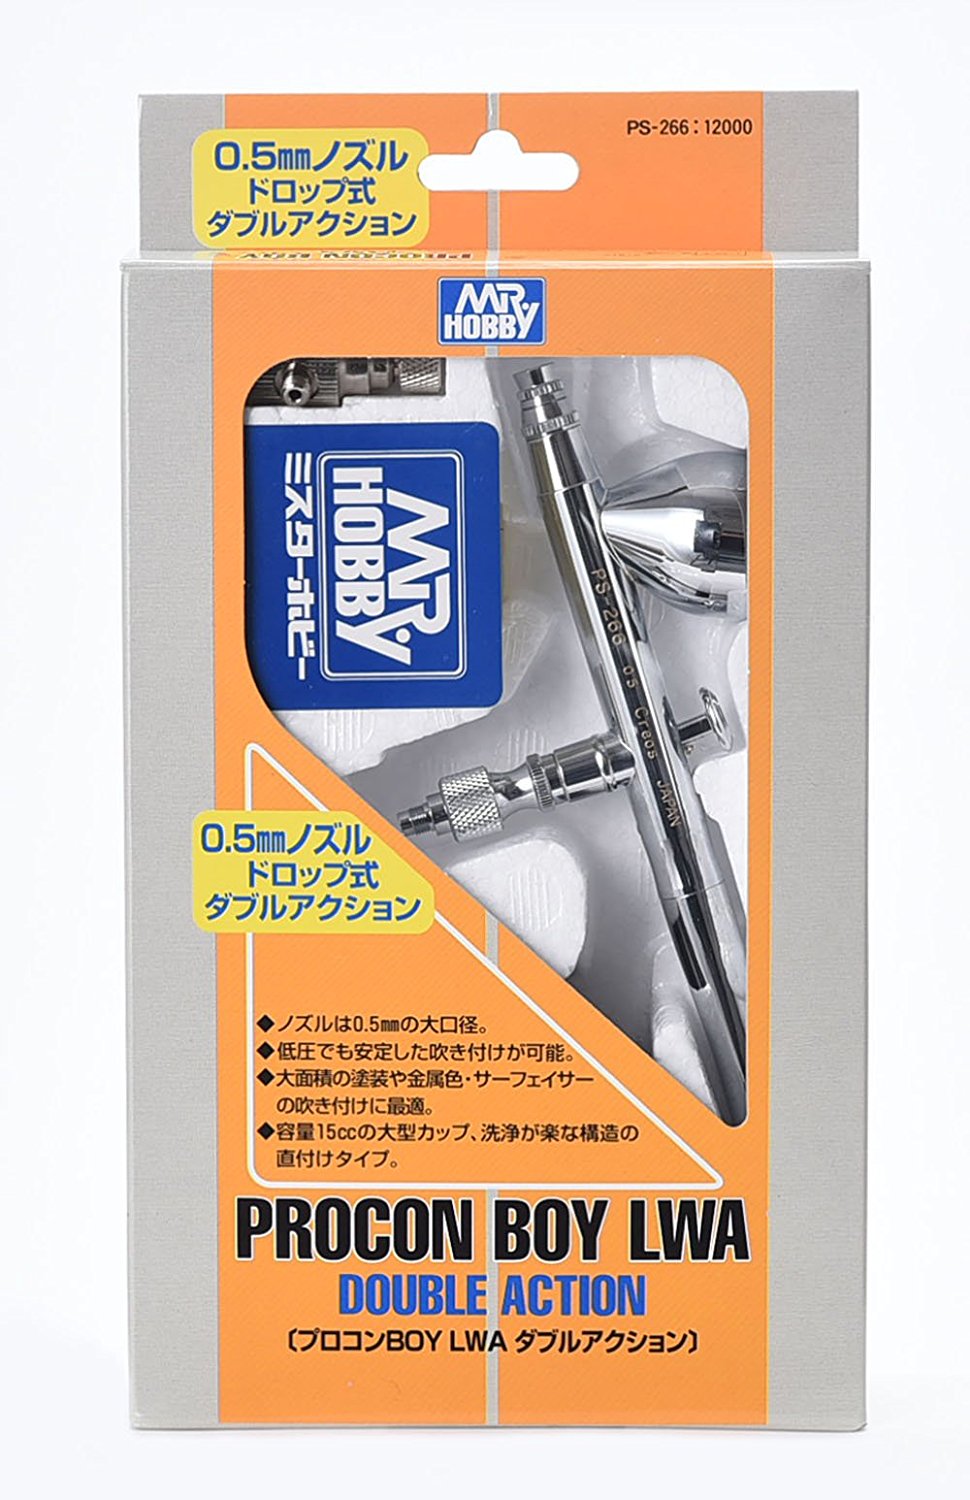 PS266 Procon Boy LWA Double Action Type (0.5mm)